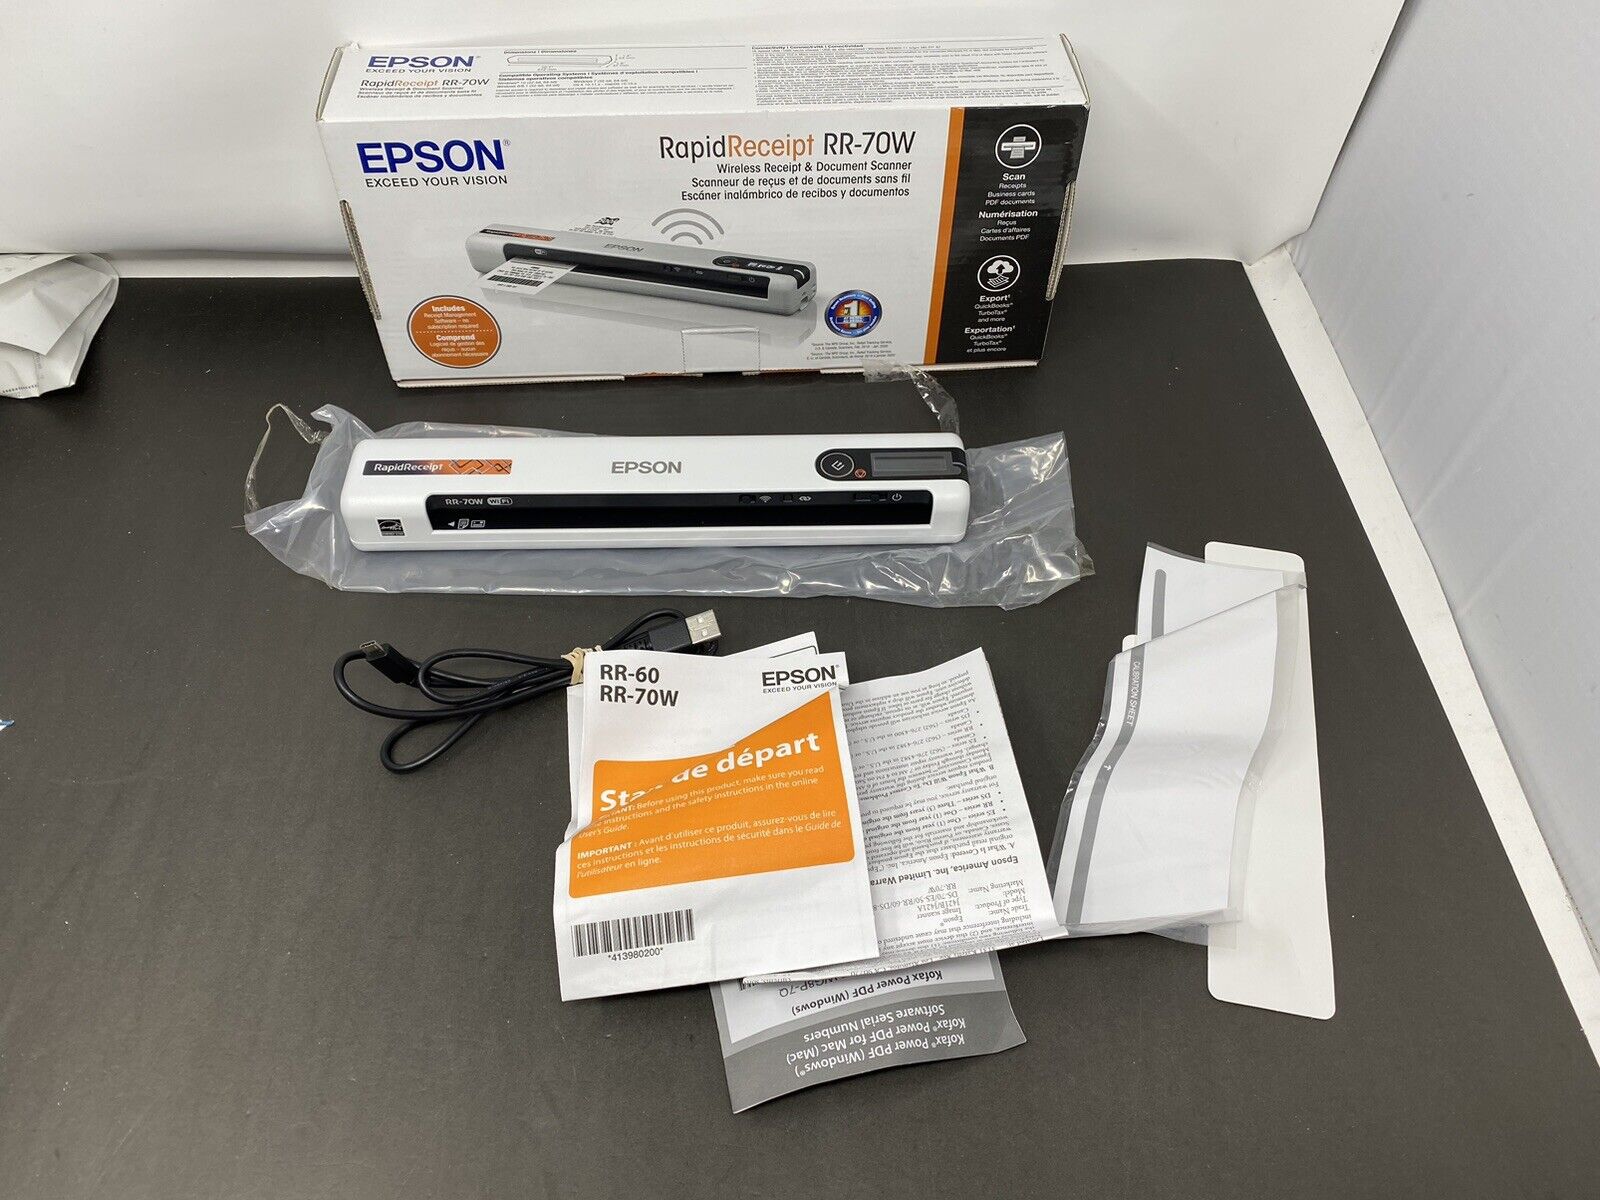 Epson RapidReceipt RR-70W Wireless Mobile Receipt and Color Document Scanner